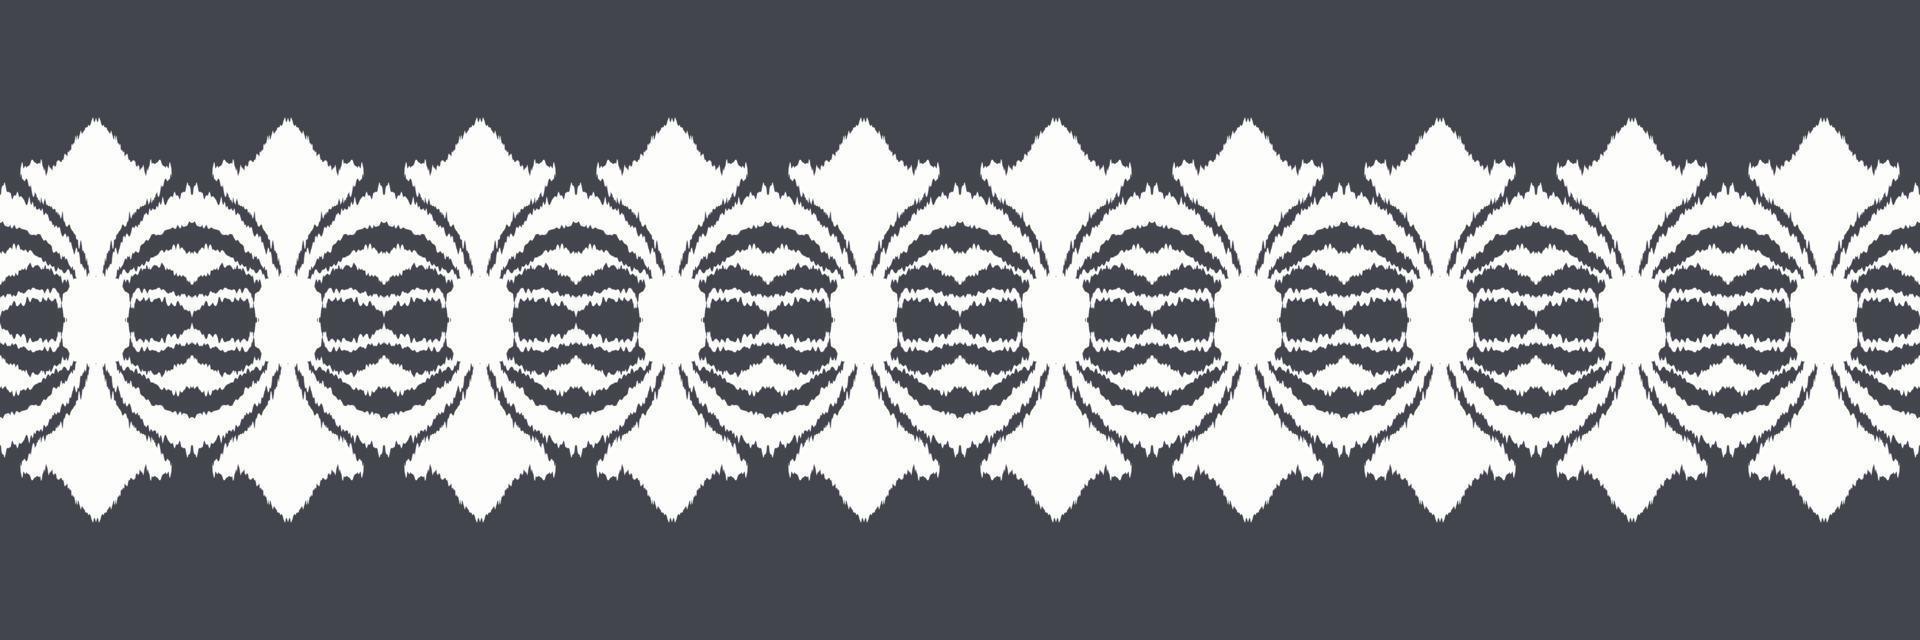 Batik-Textil-Ikat-Diamant-nahtloses Muster, digitales Vektordesign für den Druck, Saree, Kurti, Borneo, Stoffrand, Pinsel, Symbole, Muster, Baumwolle vektor